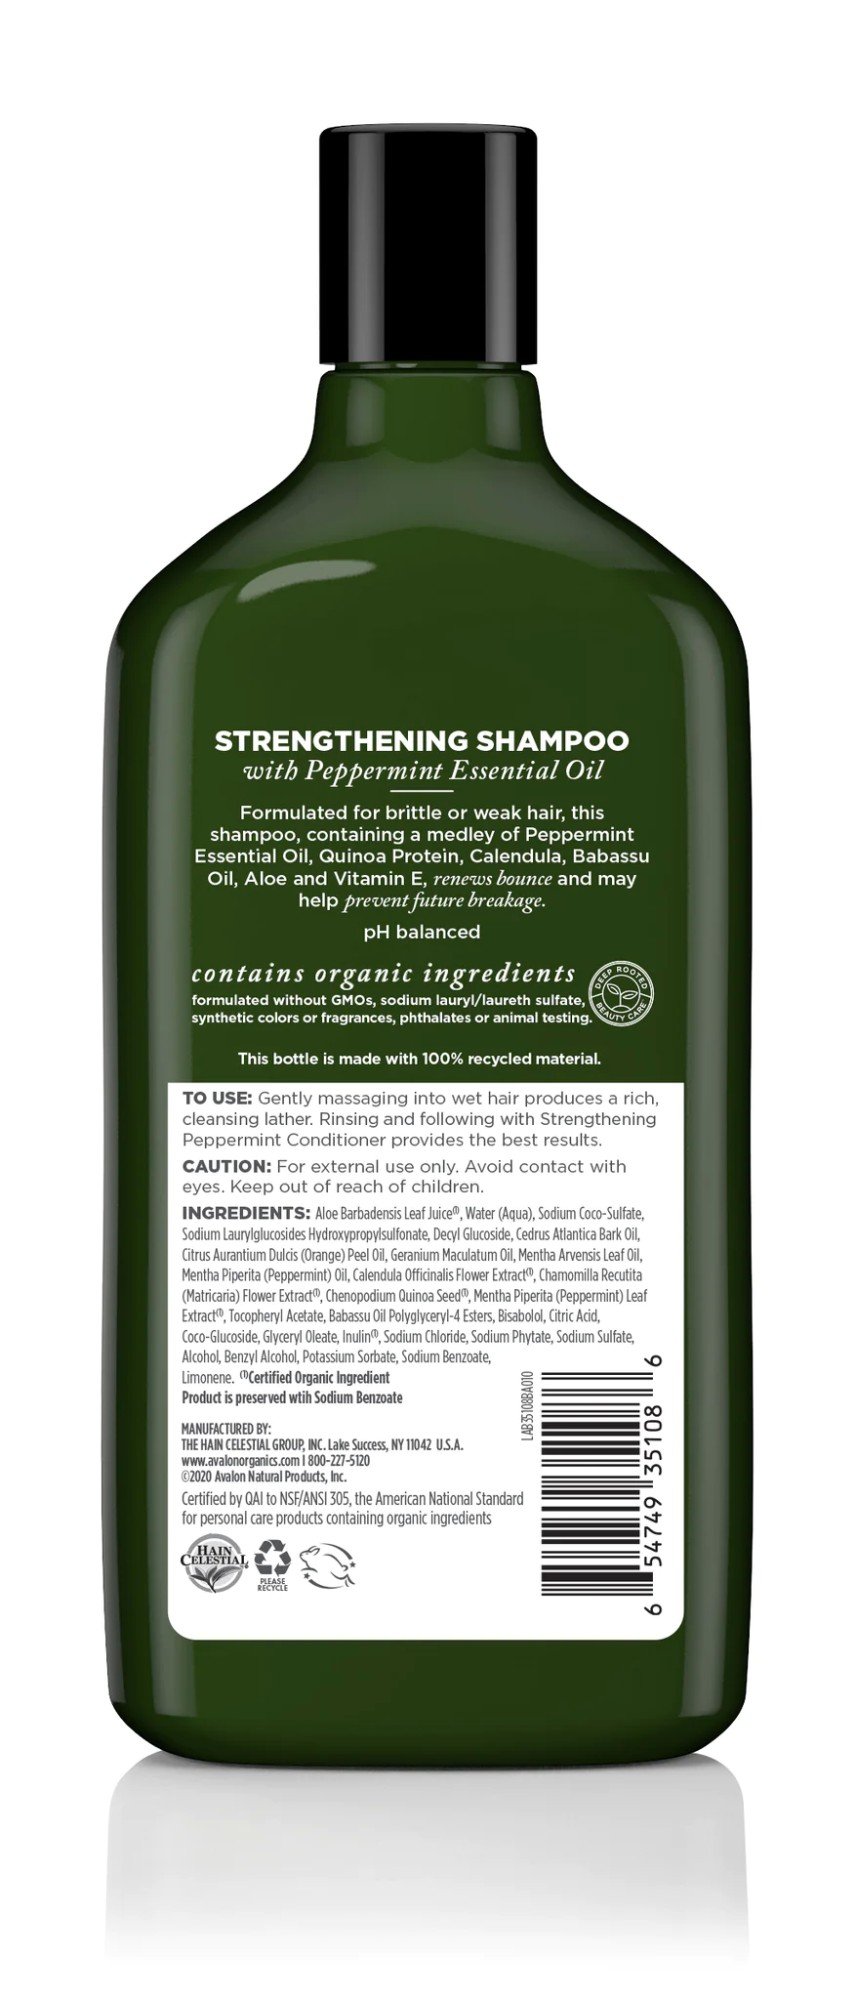 Avalon Organics Strengthening Peppermint Shampoo 11 oz Liquid